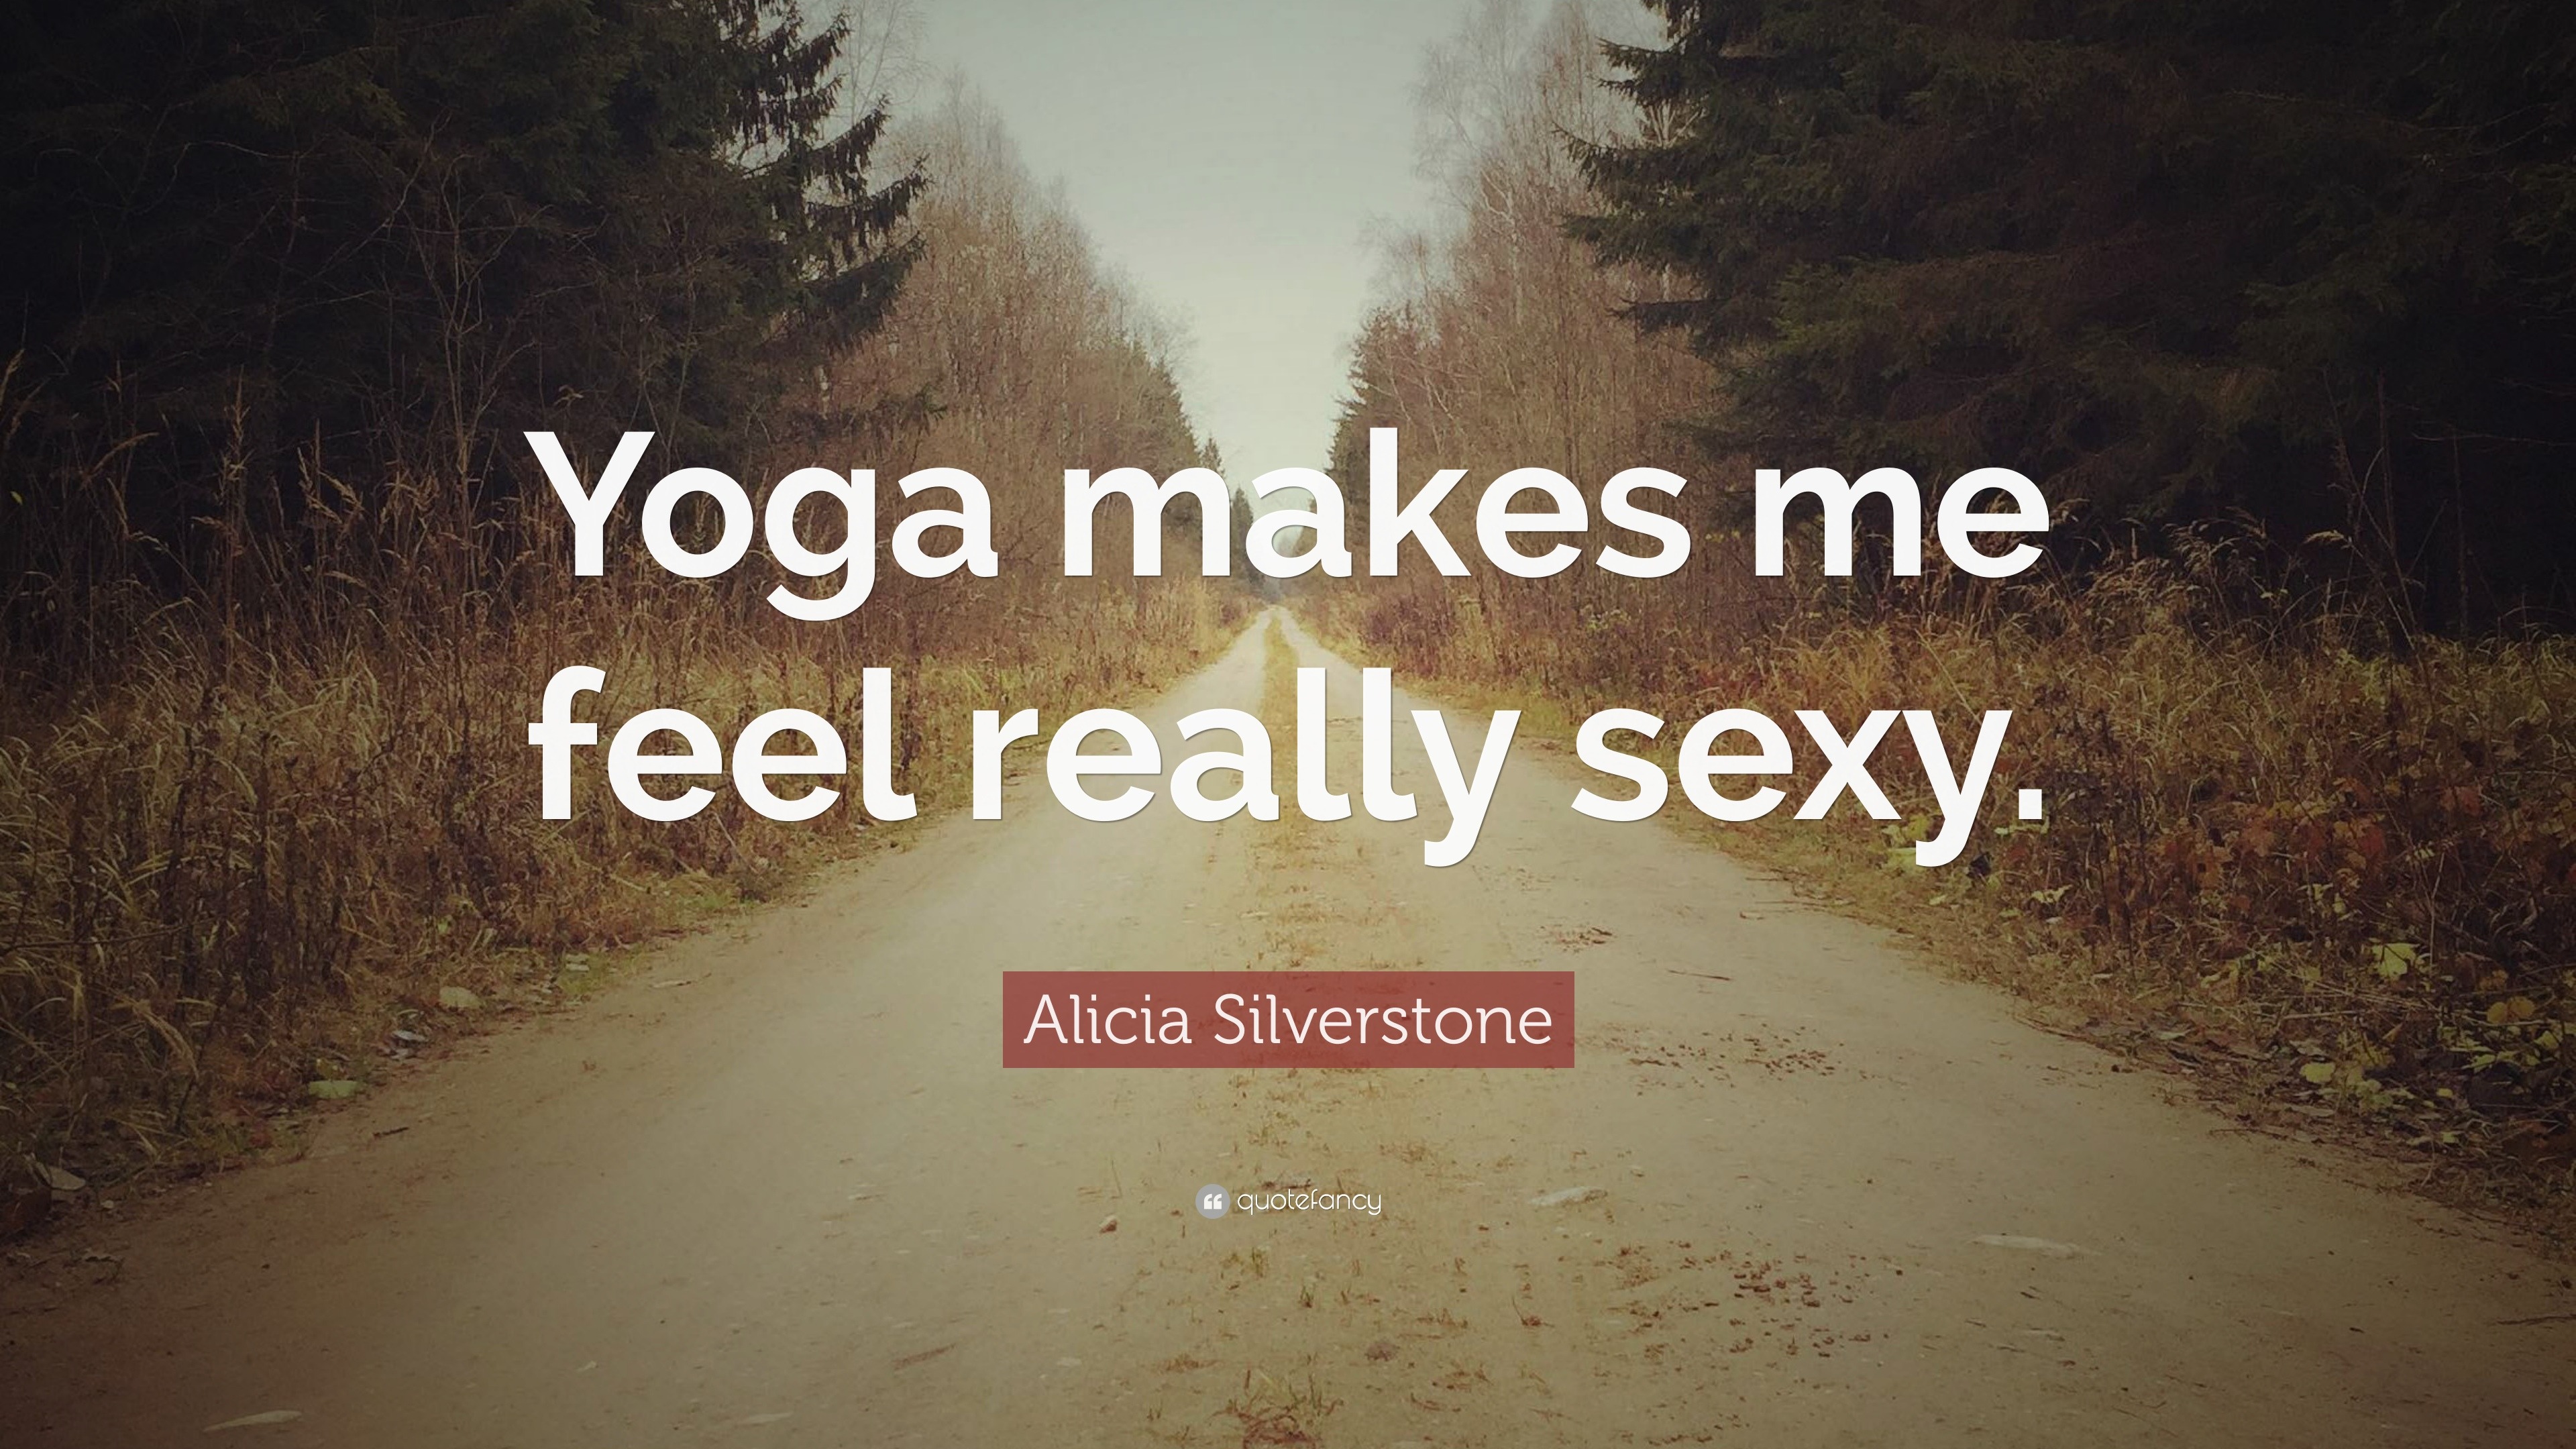 Alicia Silverstone Quote Yoga Makes Me Feel Really Sexy”